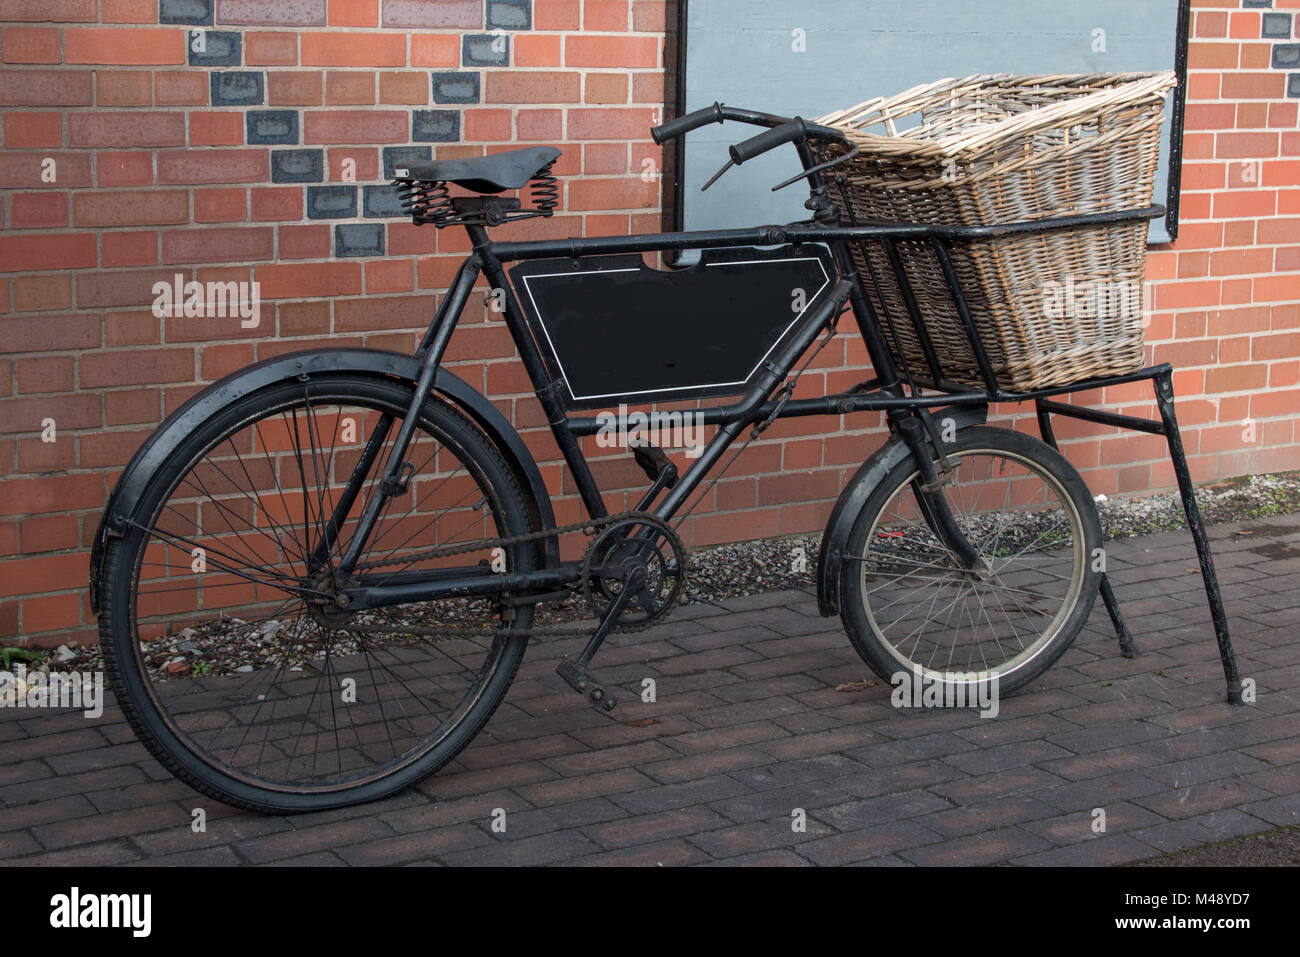 Bicicleta de reparto antigua fotografías e imágenes de alta resolución -  Alamy